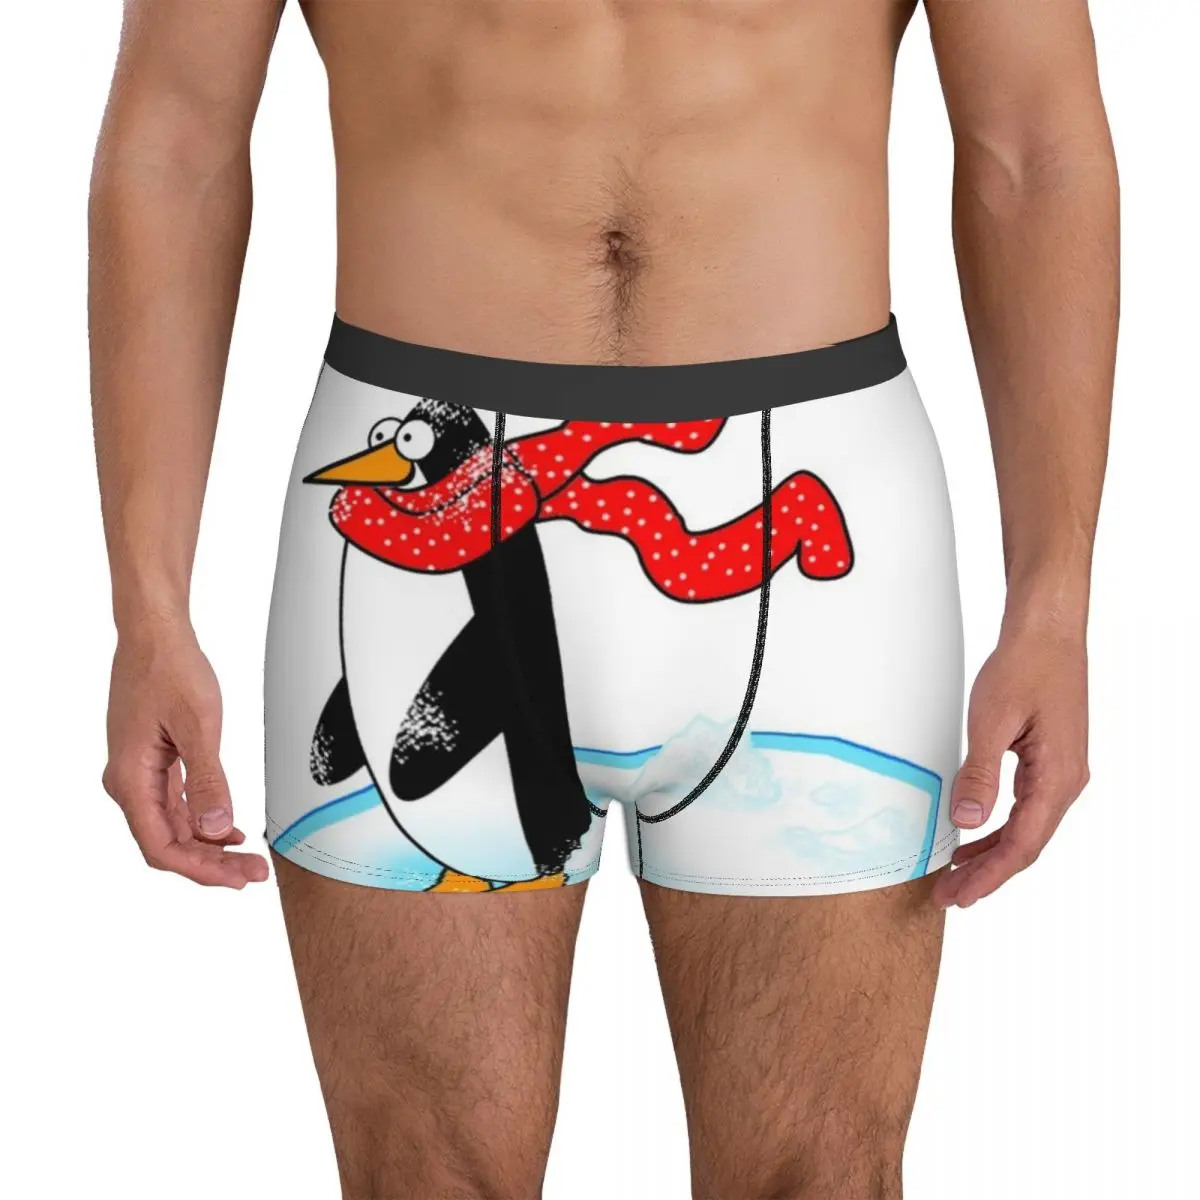 Pingu Underwear noot rabby pingu meme funny stop motion Sexy Underpants Printed Shorts Briefs Pouch Men Large Size Boxer Shorts